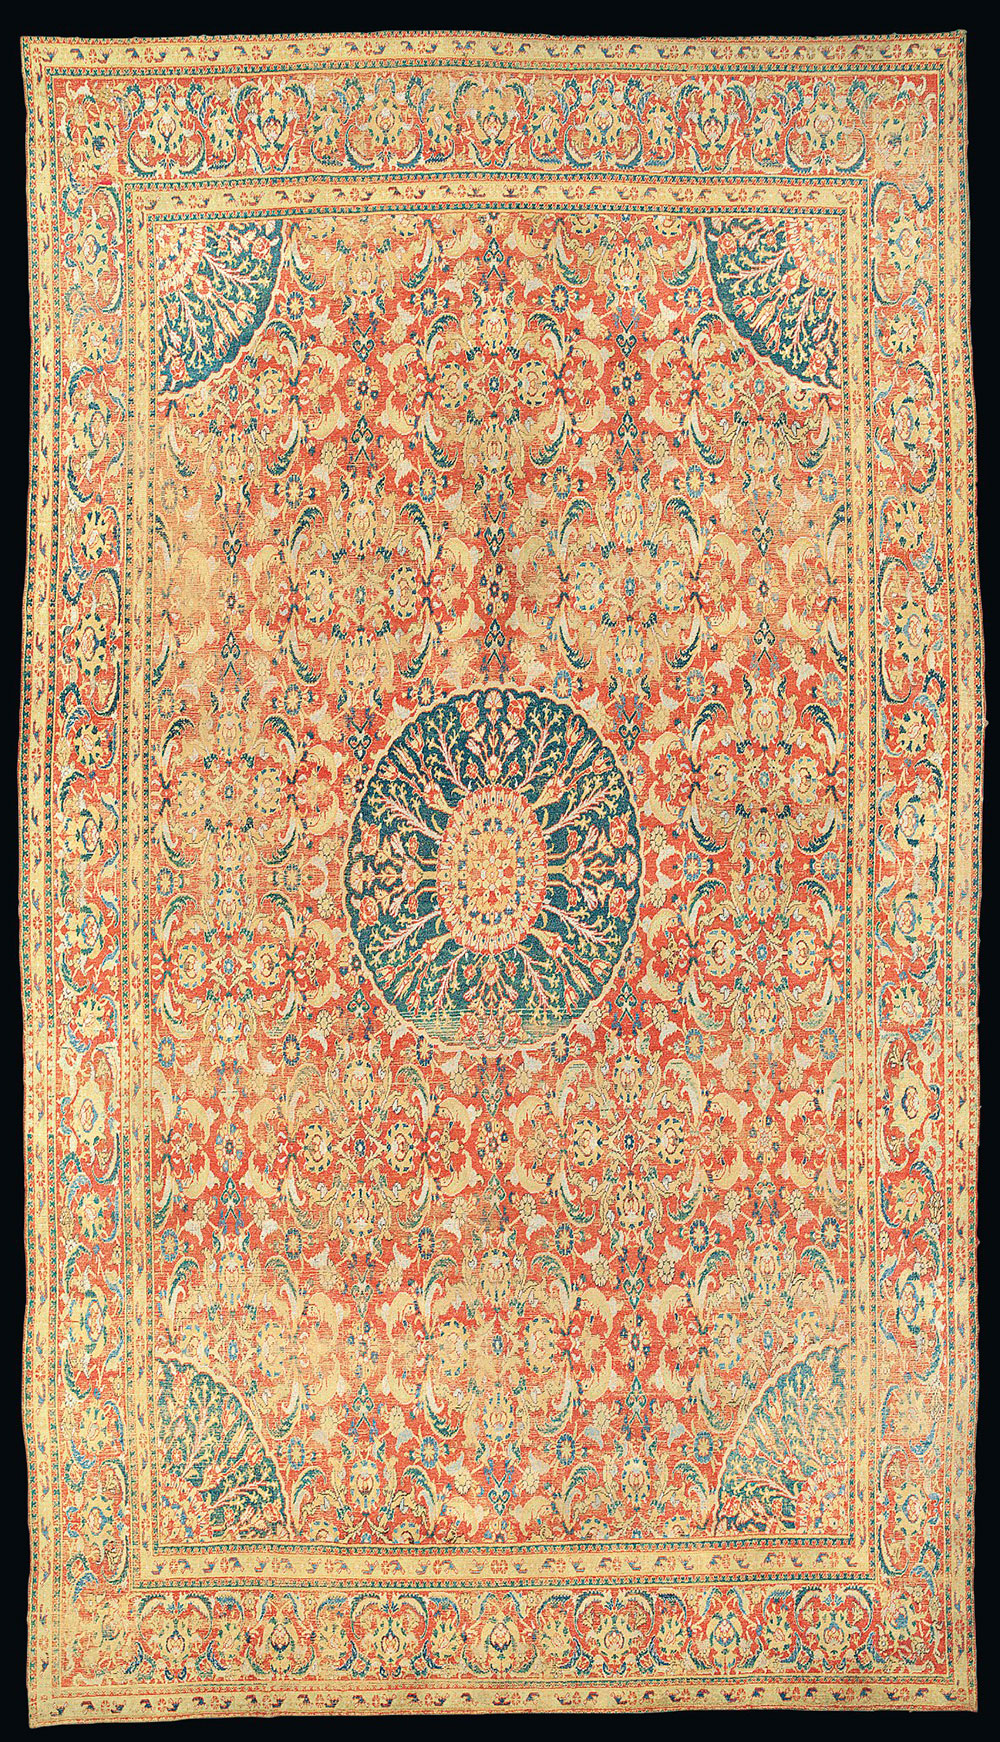 Lot 50, A Cairene Carpet, Egypt, second half 16th century, estimate £60,000-80,000, Christie's